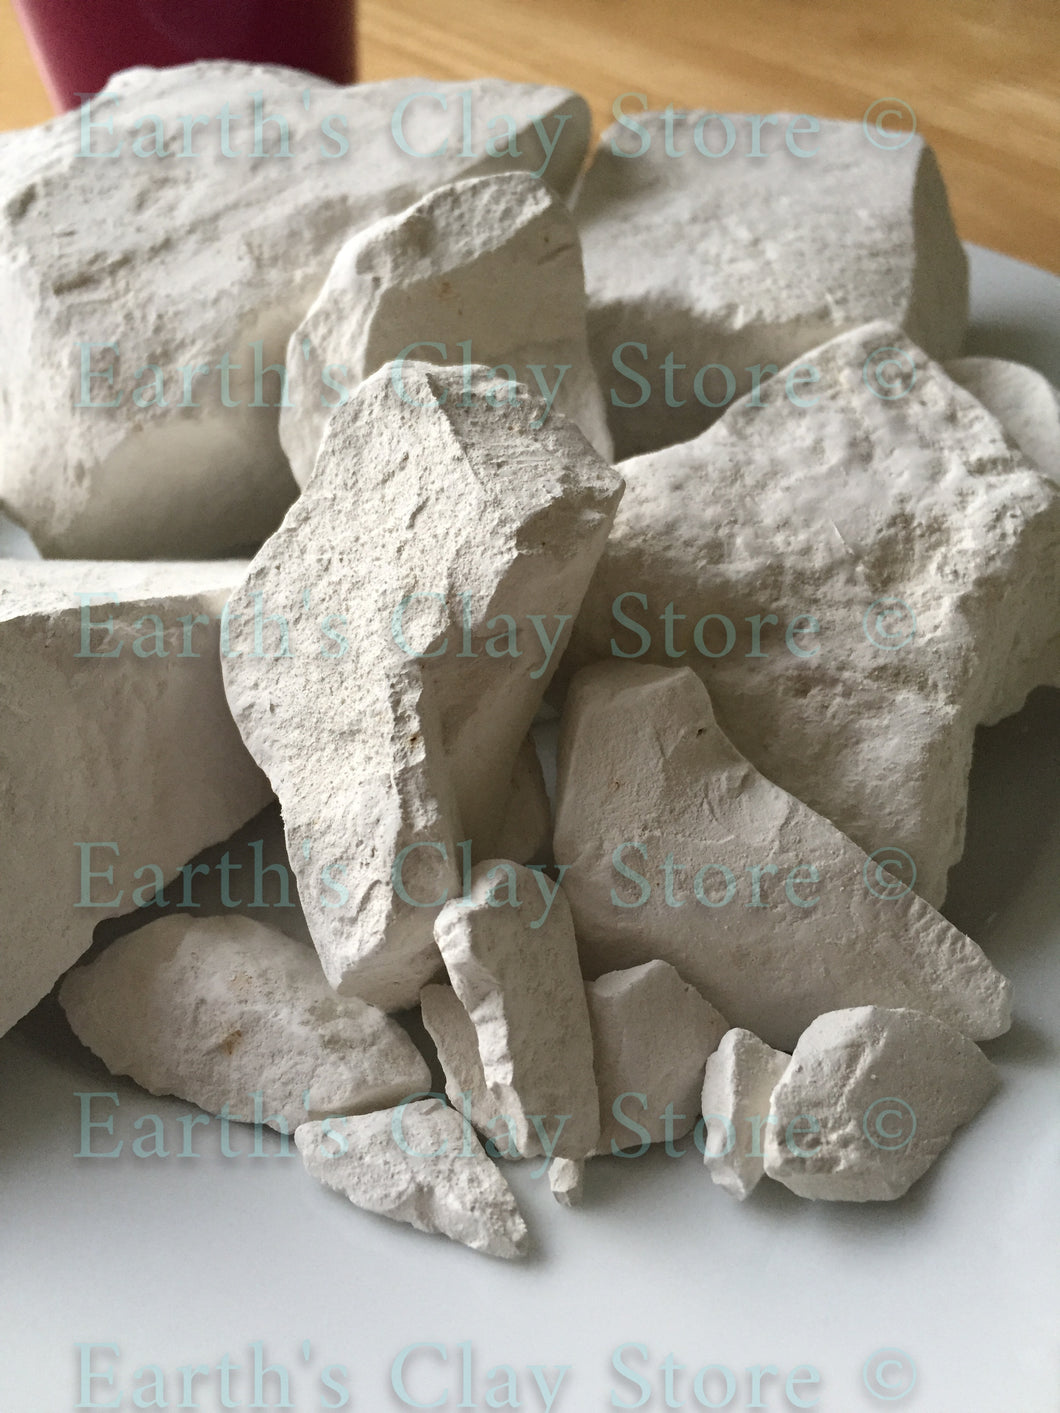 Kamenka Chalk – Earth's Clay Store